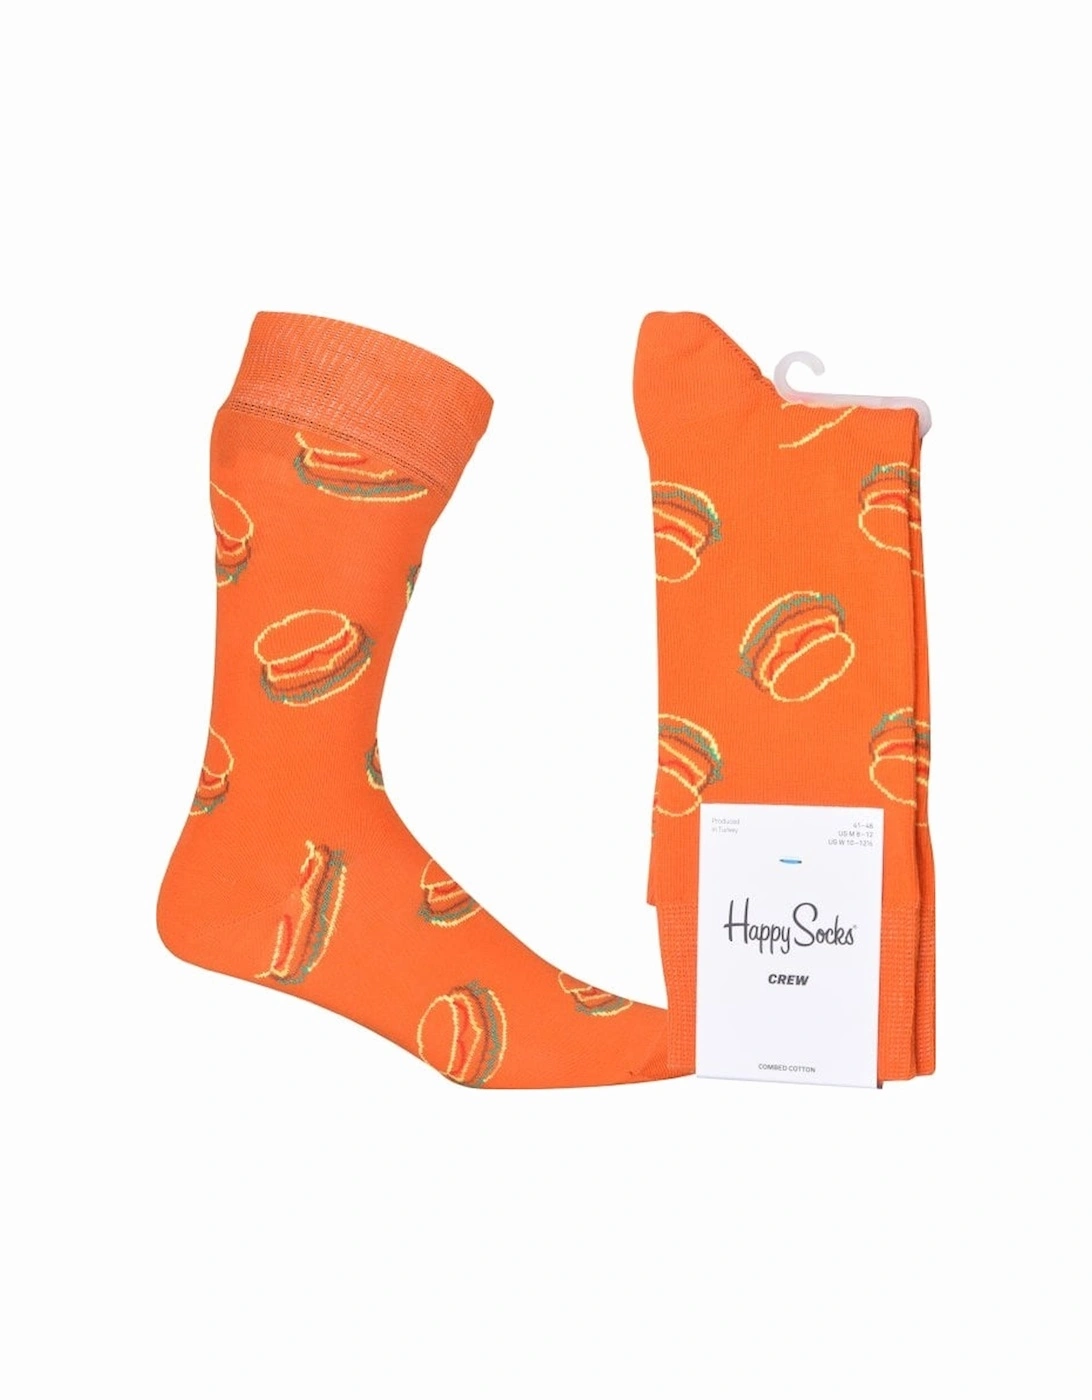 Lunch Time Socks, Orange, 4 of 3